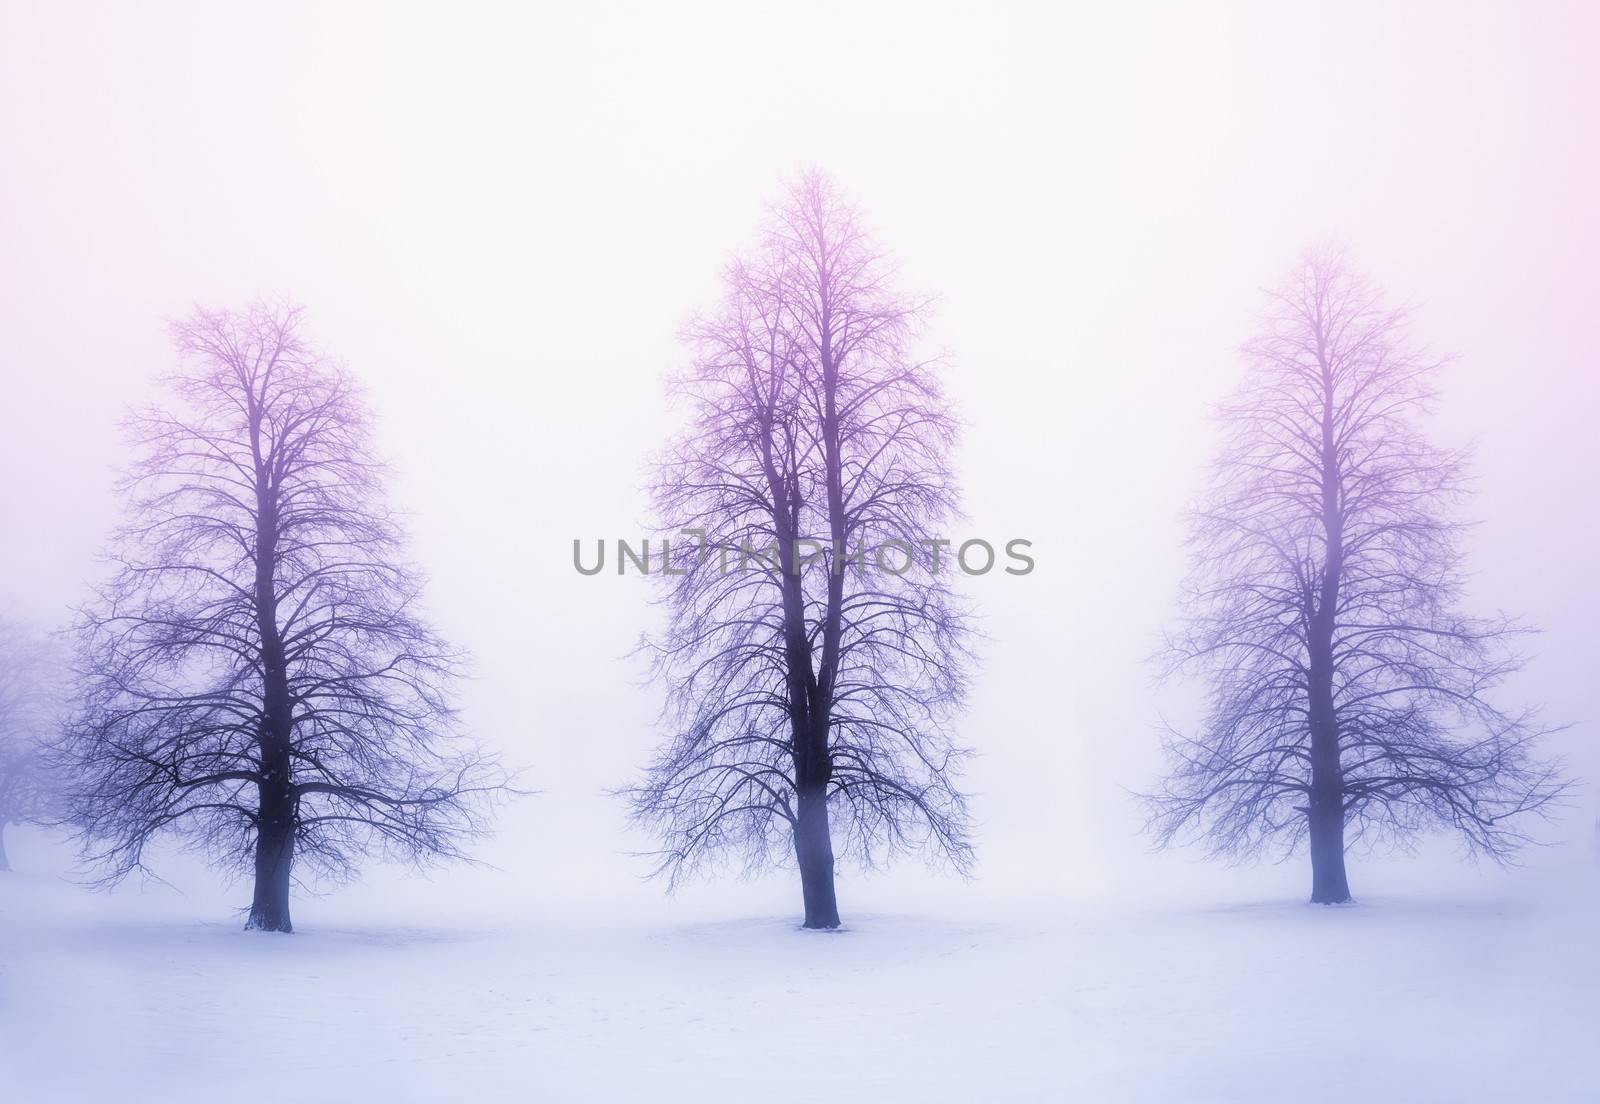 Foggy winter sunrise scene with three leafless trees